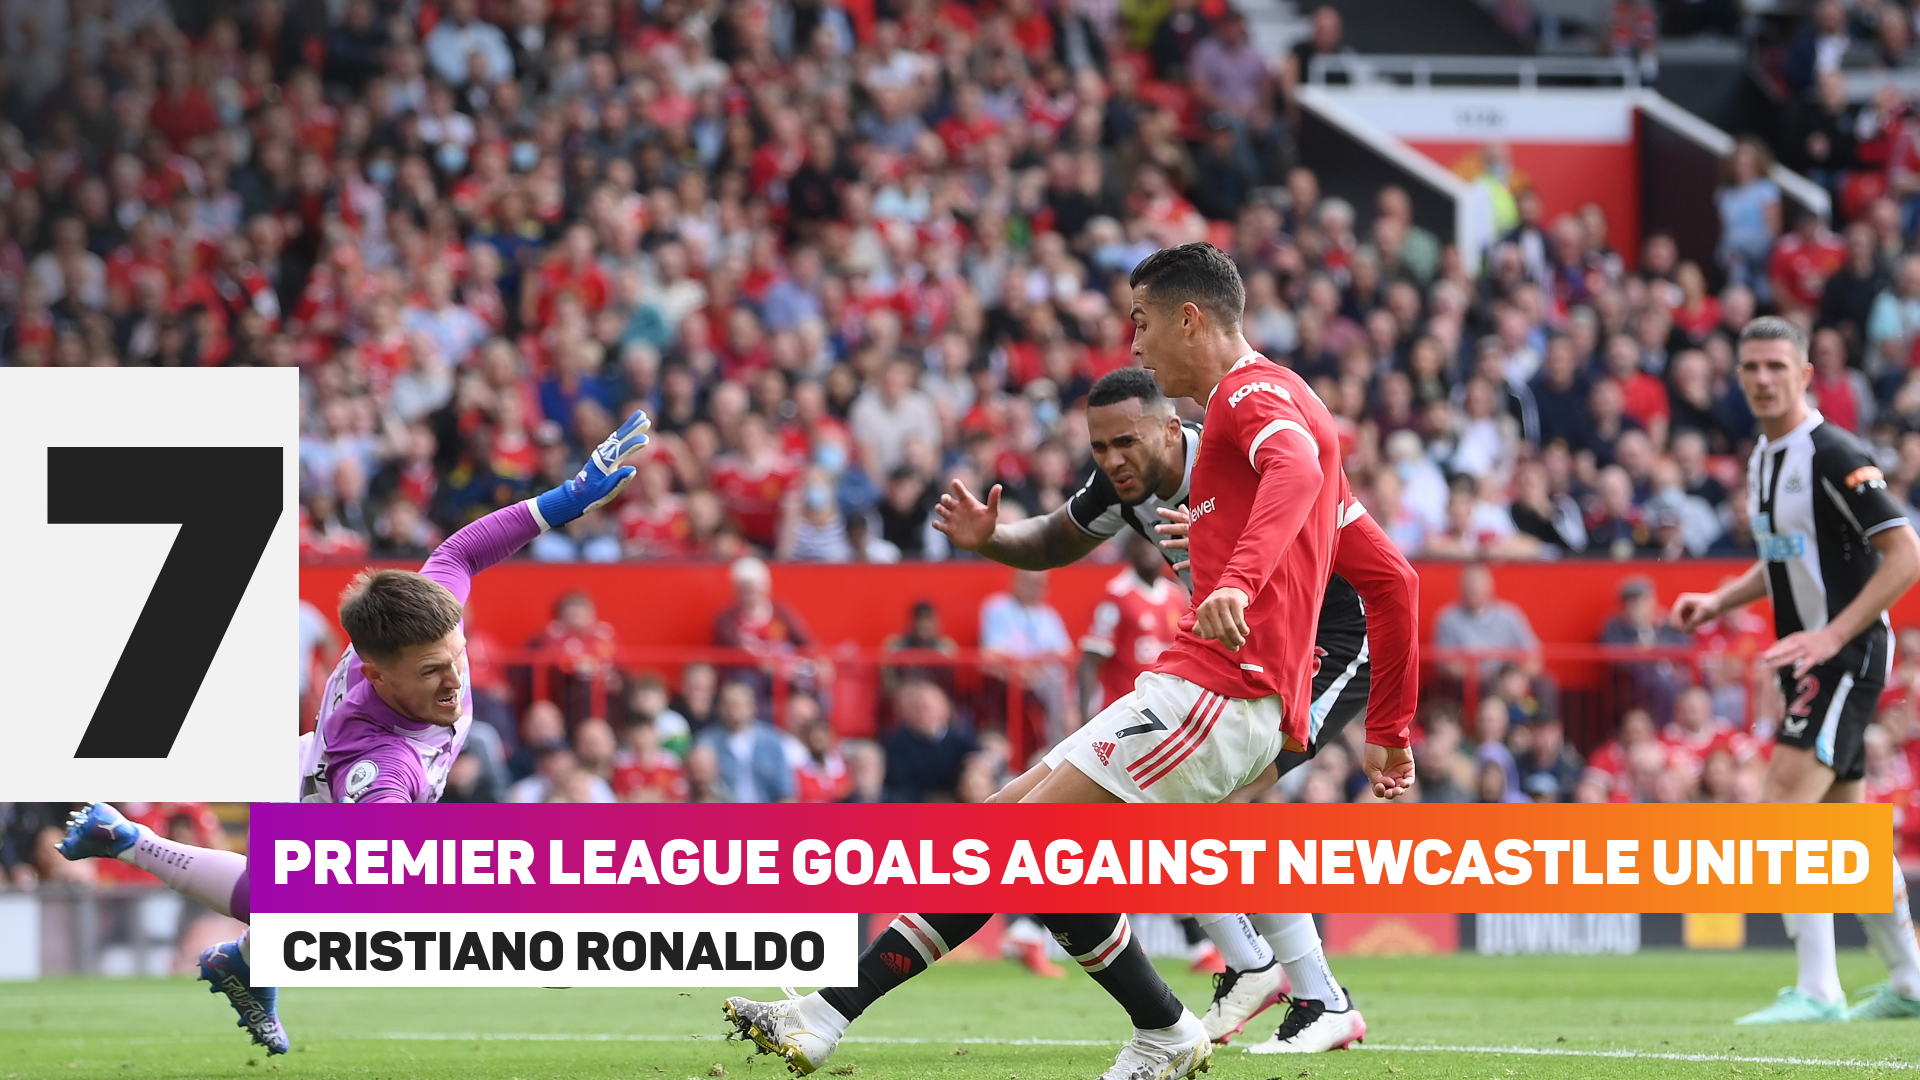 Cristiano Ronaldo has scored seven Premier League goals against Newcastle United